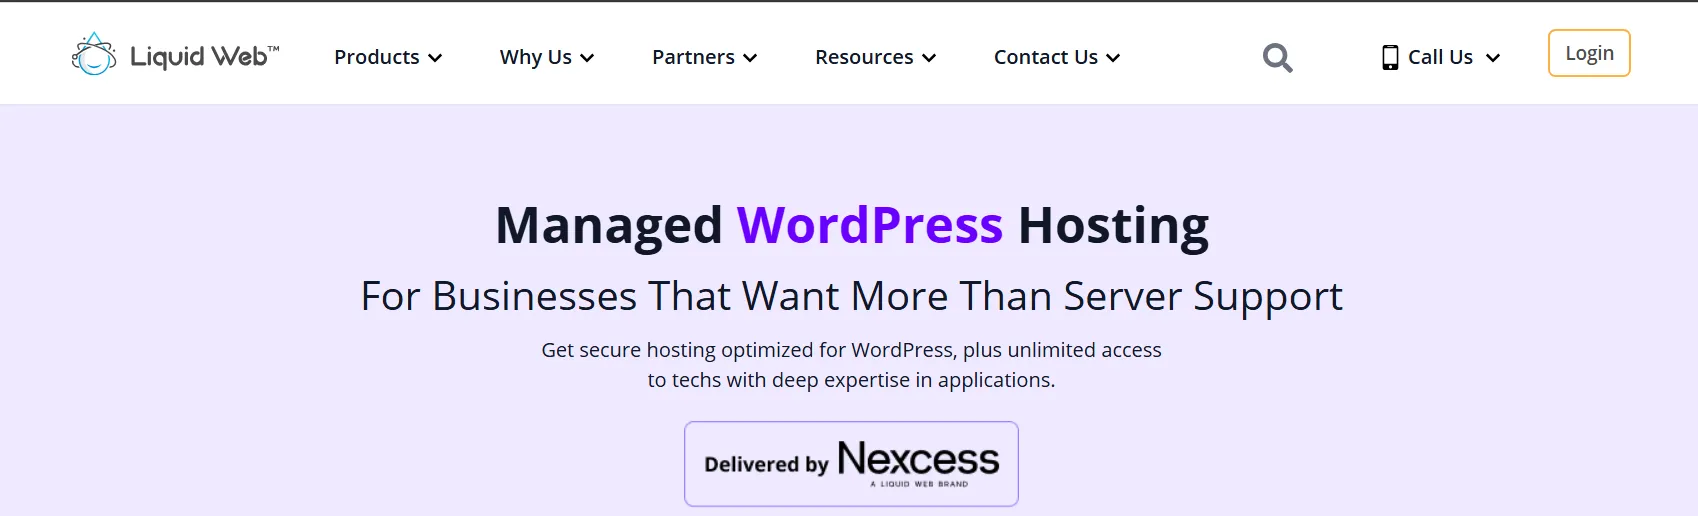 WordPress Hosting by Liquidweb